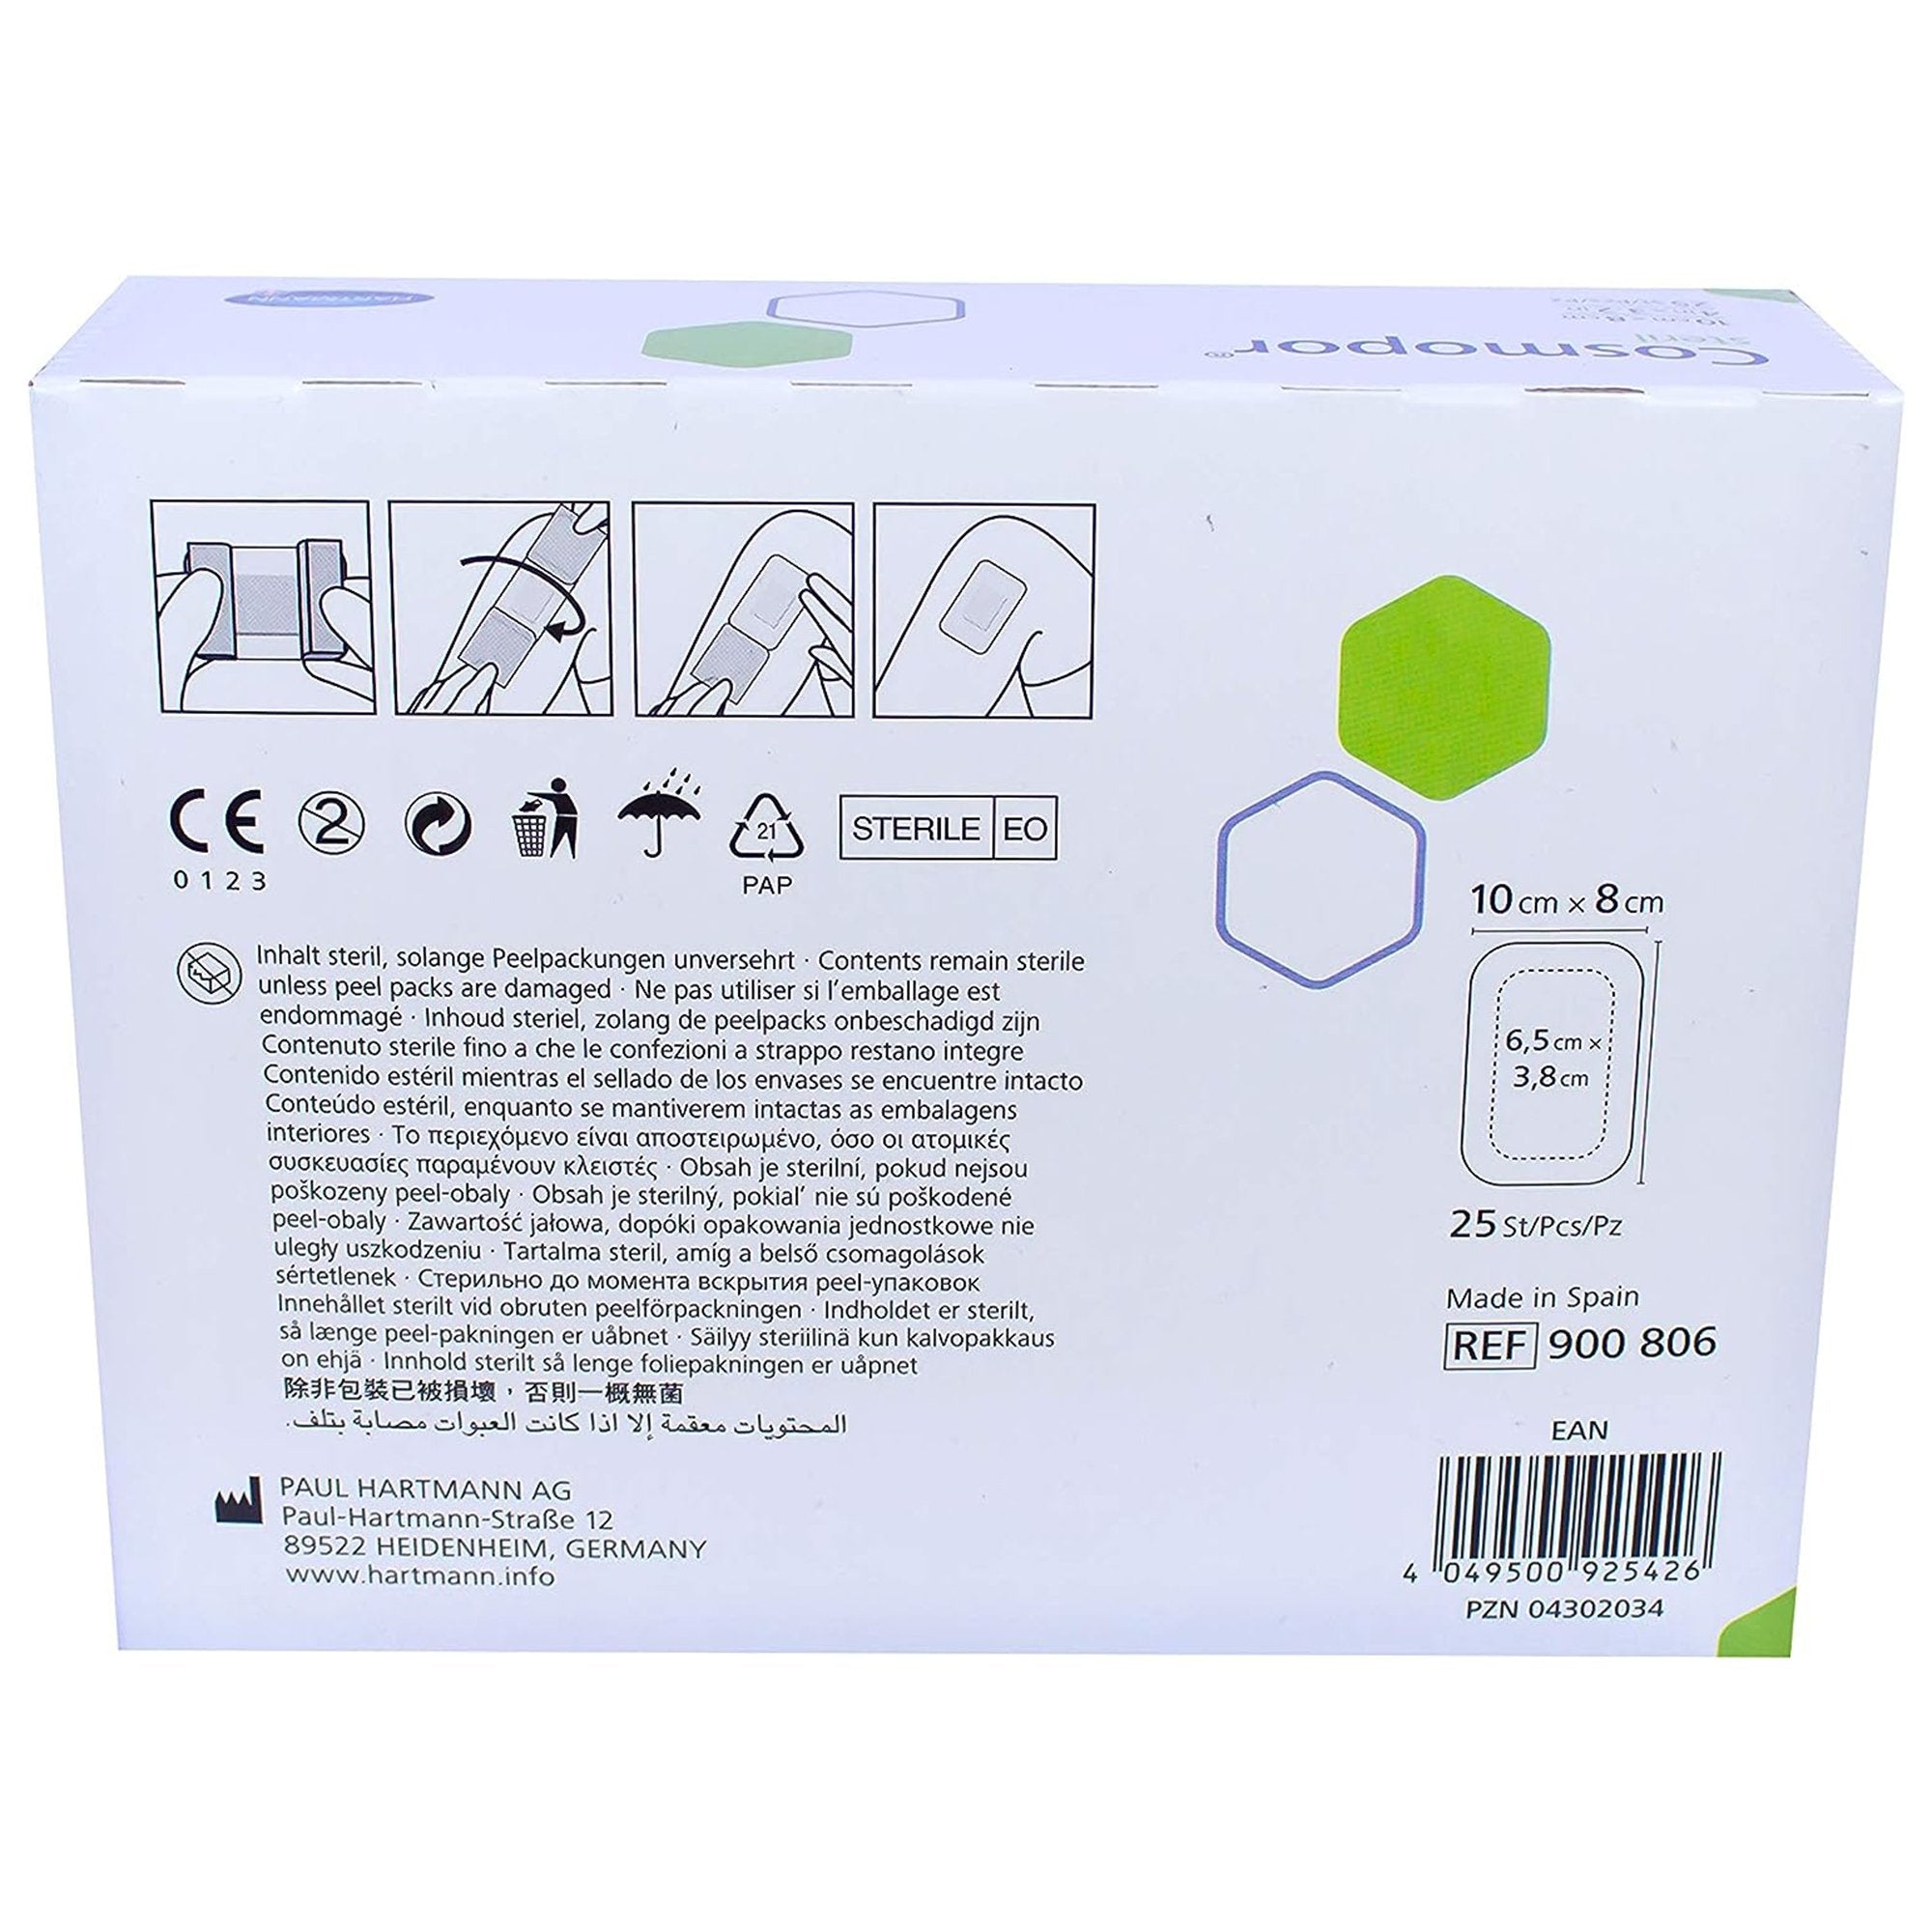 Adhesive Dressing Cosmopor® 3-1/5 X 4 Inch Nonwoven Rectangle White Sterile